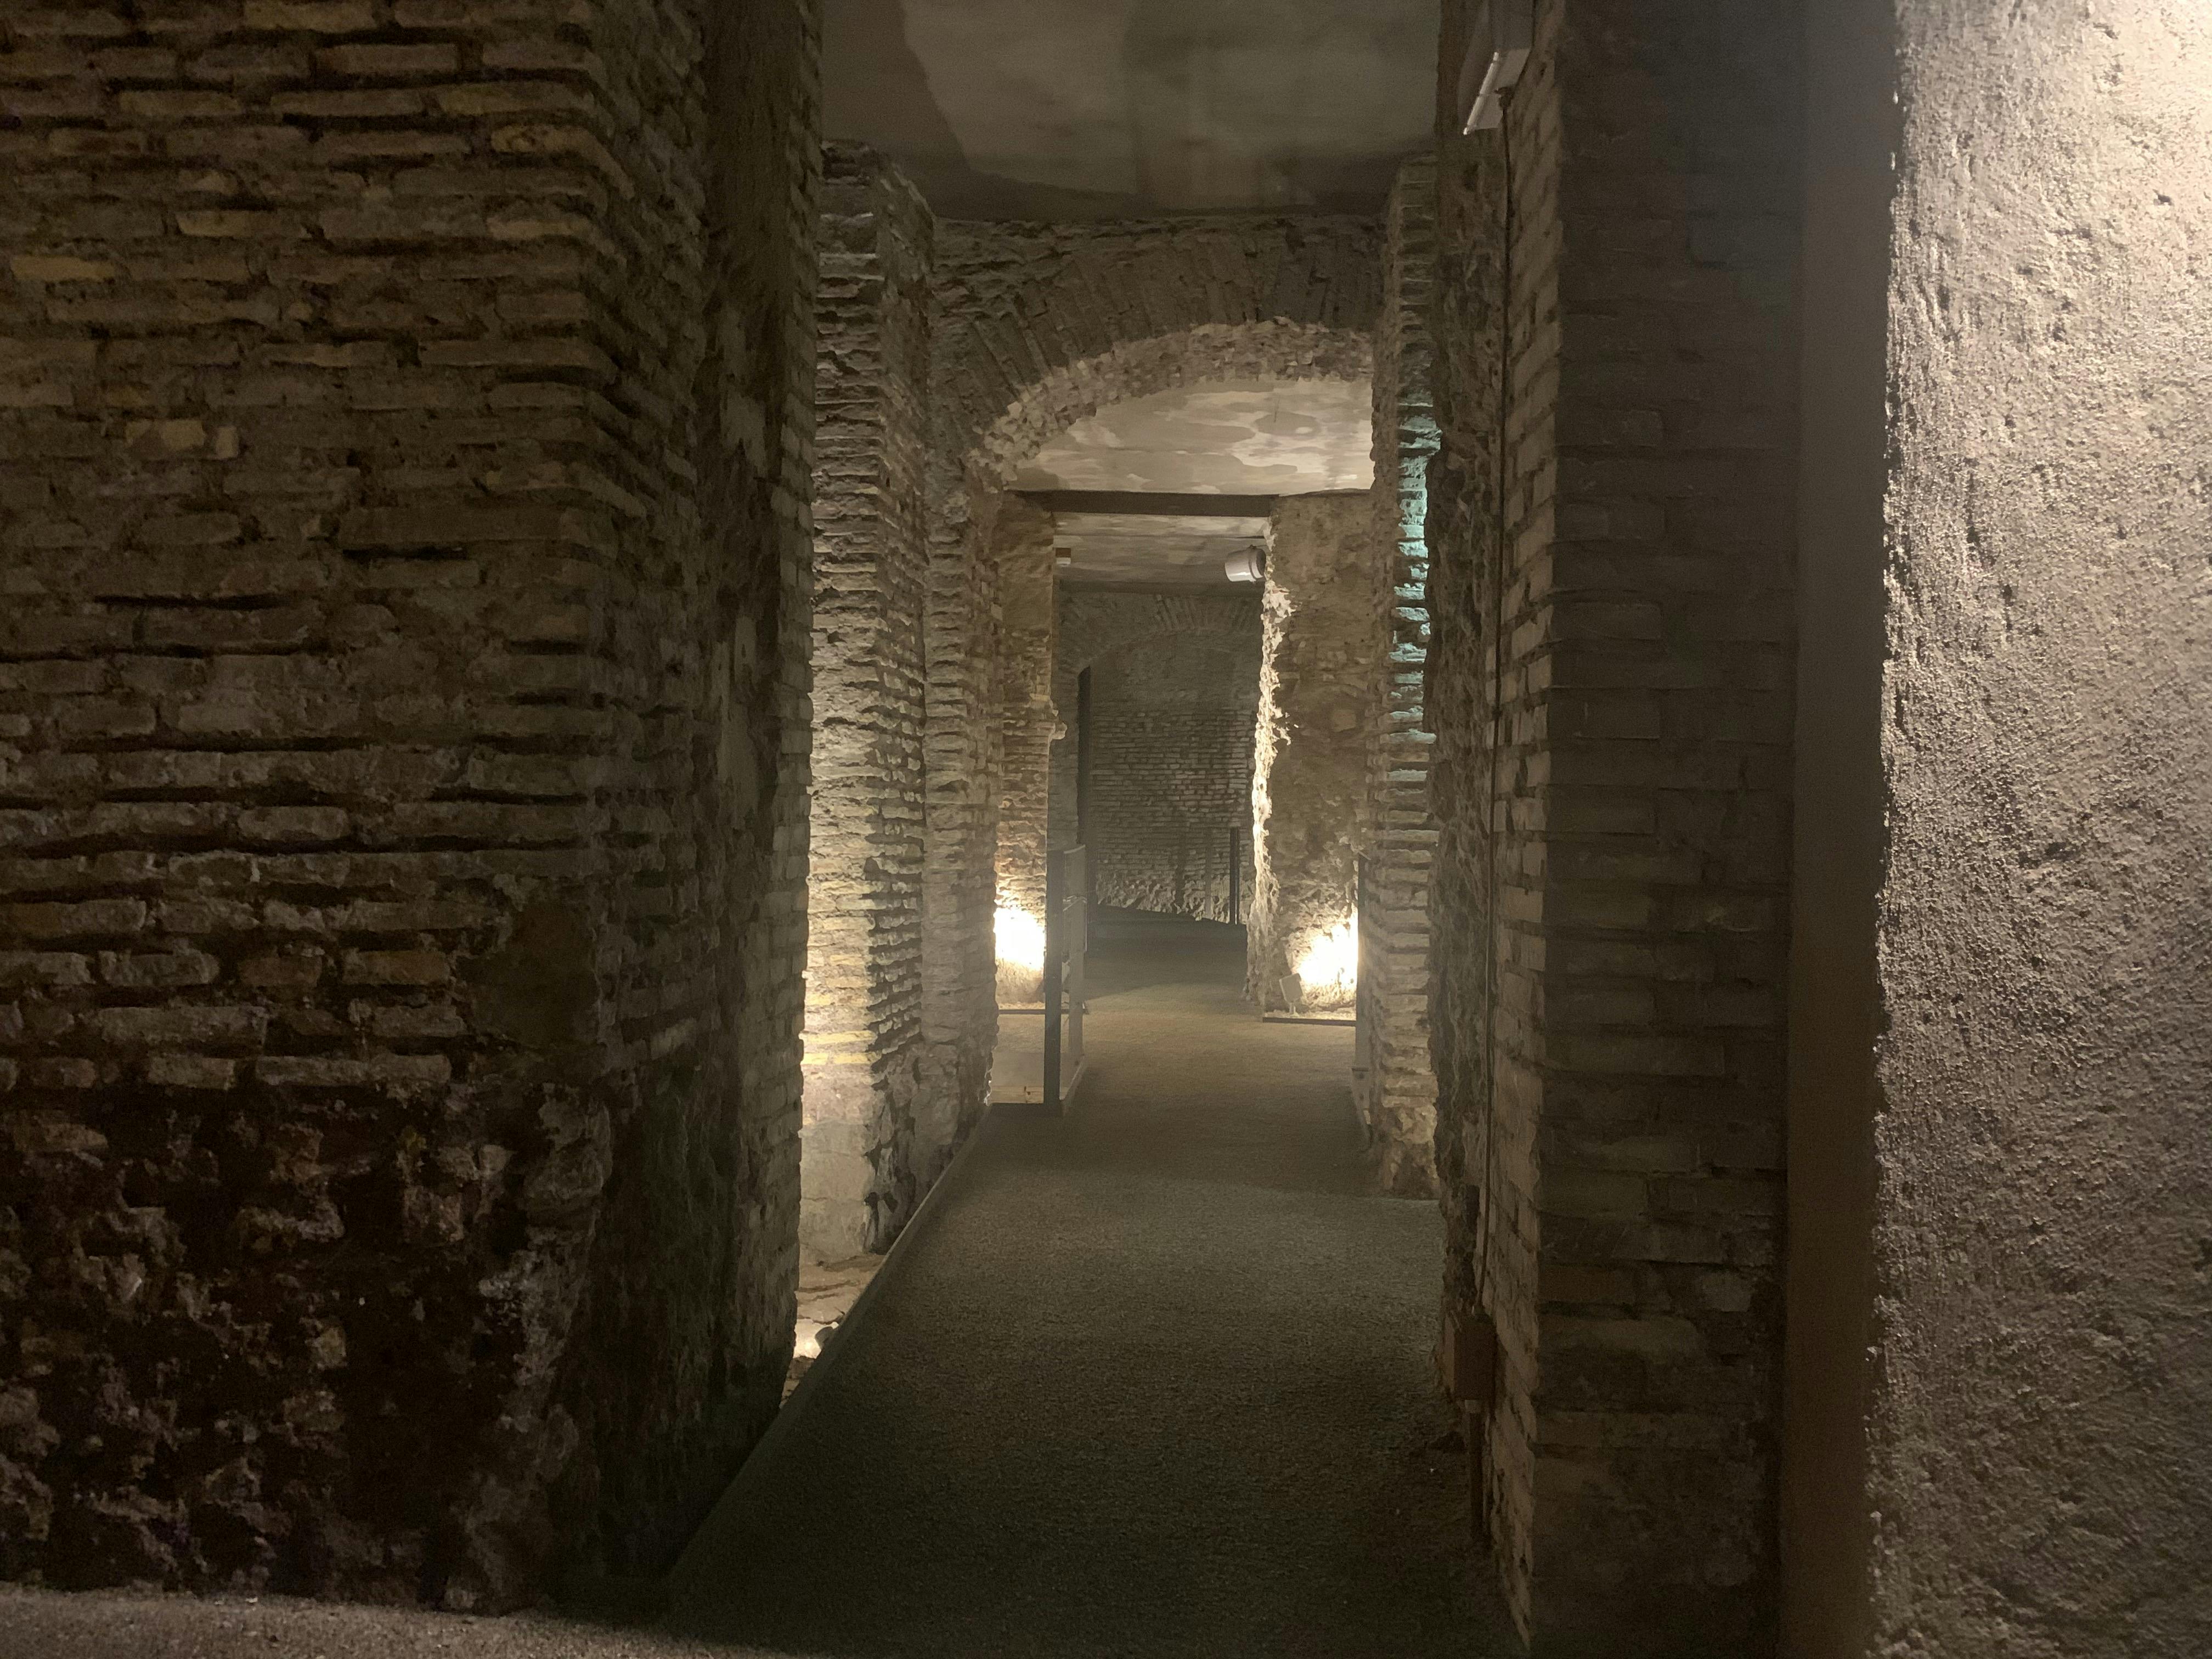 Piazza Navona underground - Stadium of Domitian exclusive route entrance tickets